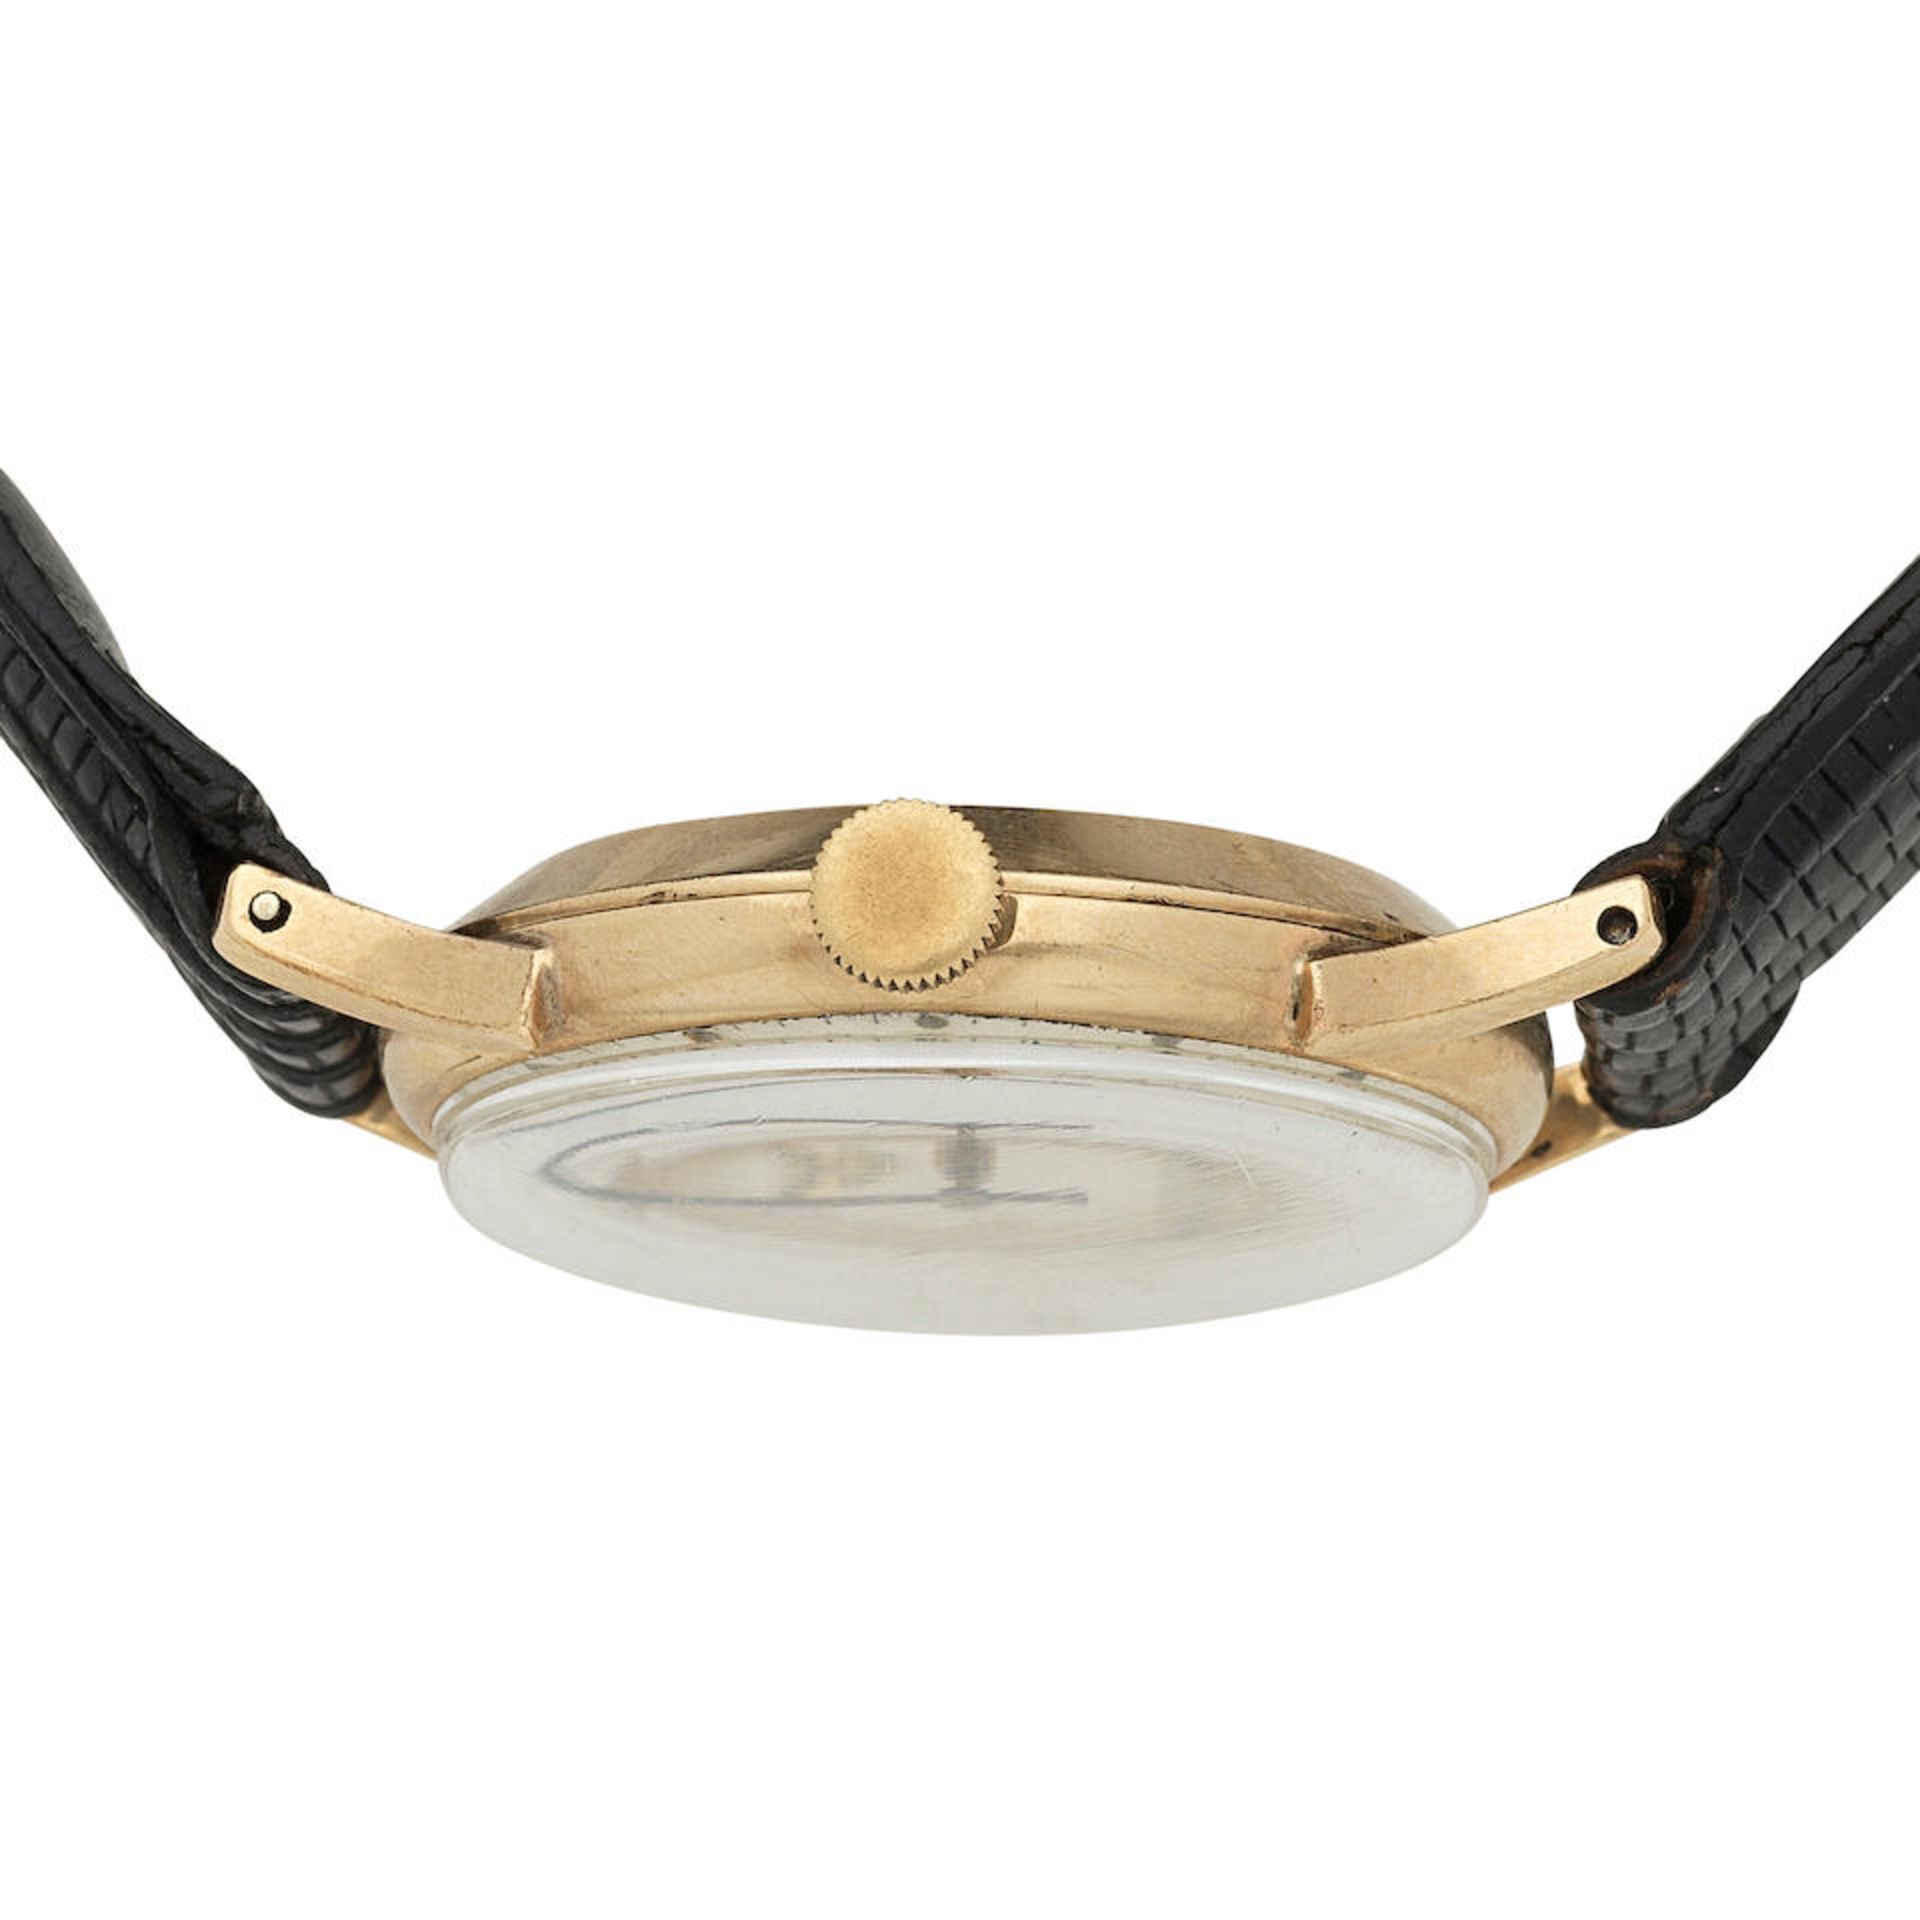 Rolex. A 9K gold manual wind wristwatch Ref: 12857, Birmingham Hallmark for 1954 - Image 3 of 5